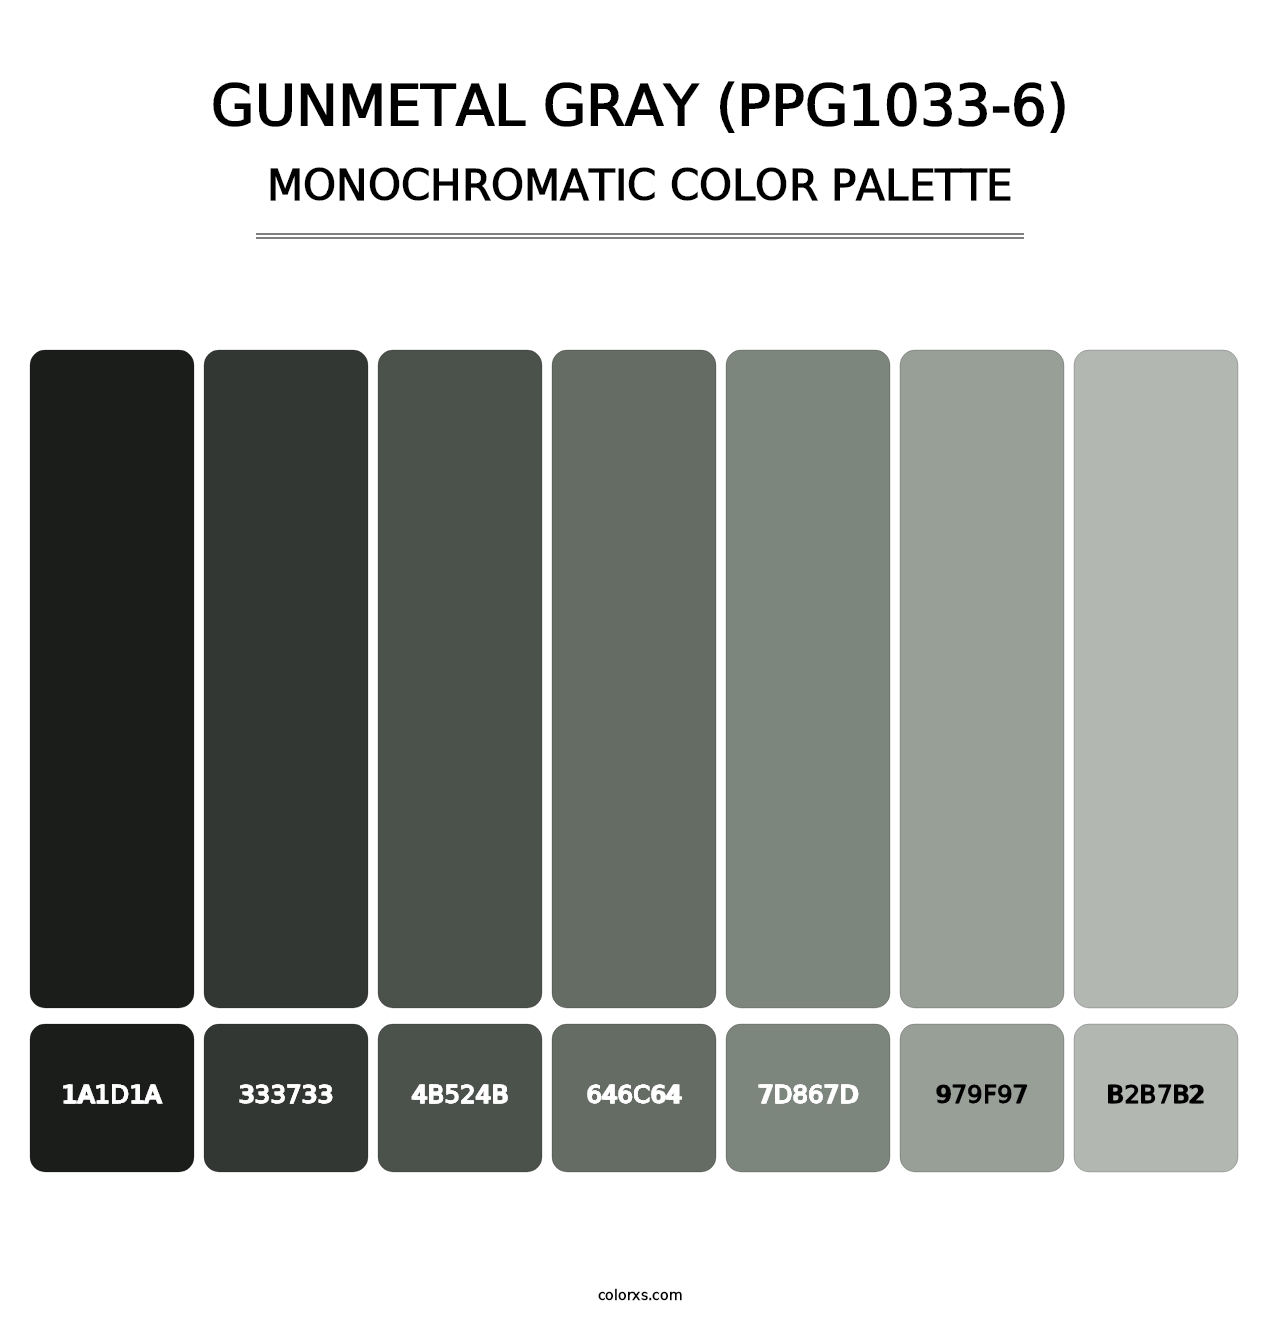 Gunmetal Gray (PPG1033-6) - Monochromatic Color Palette